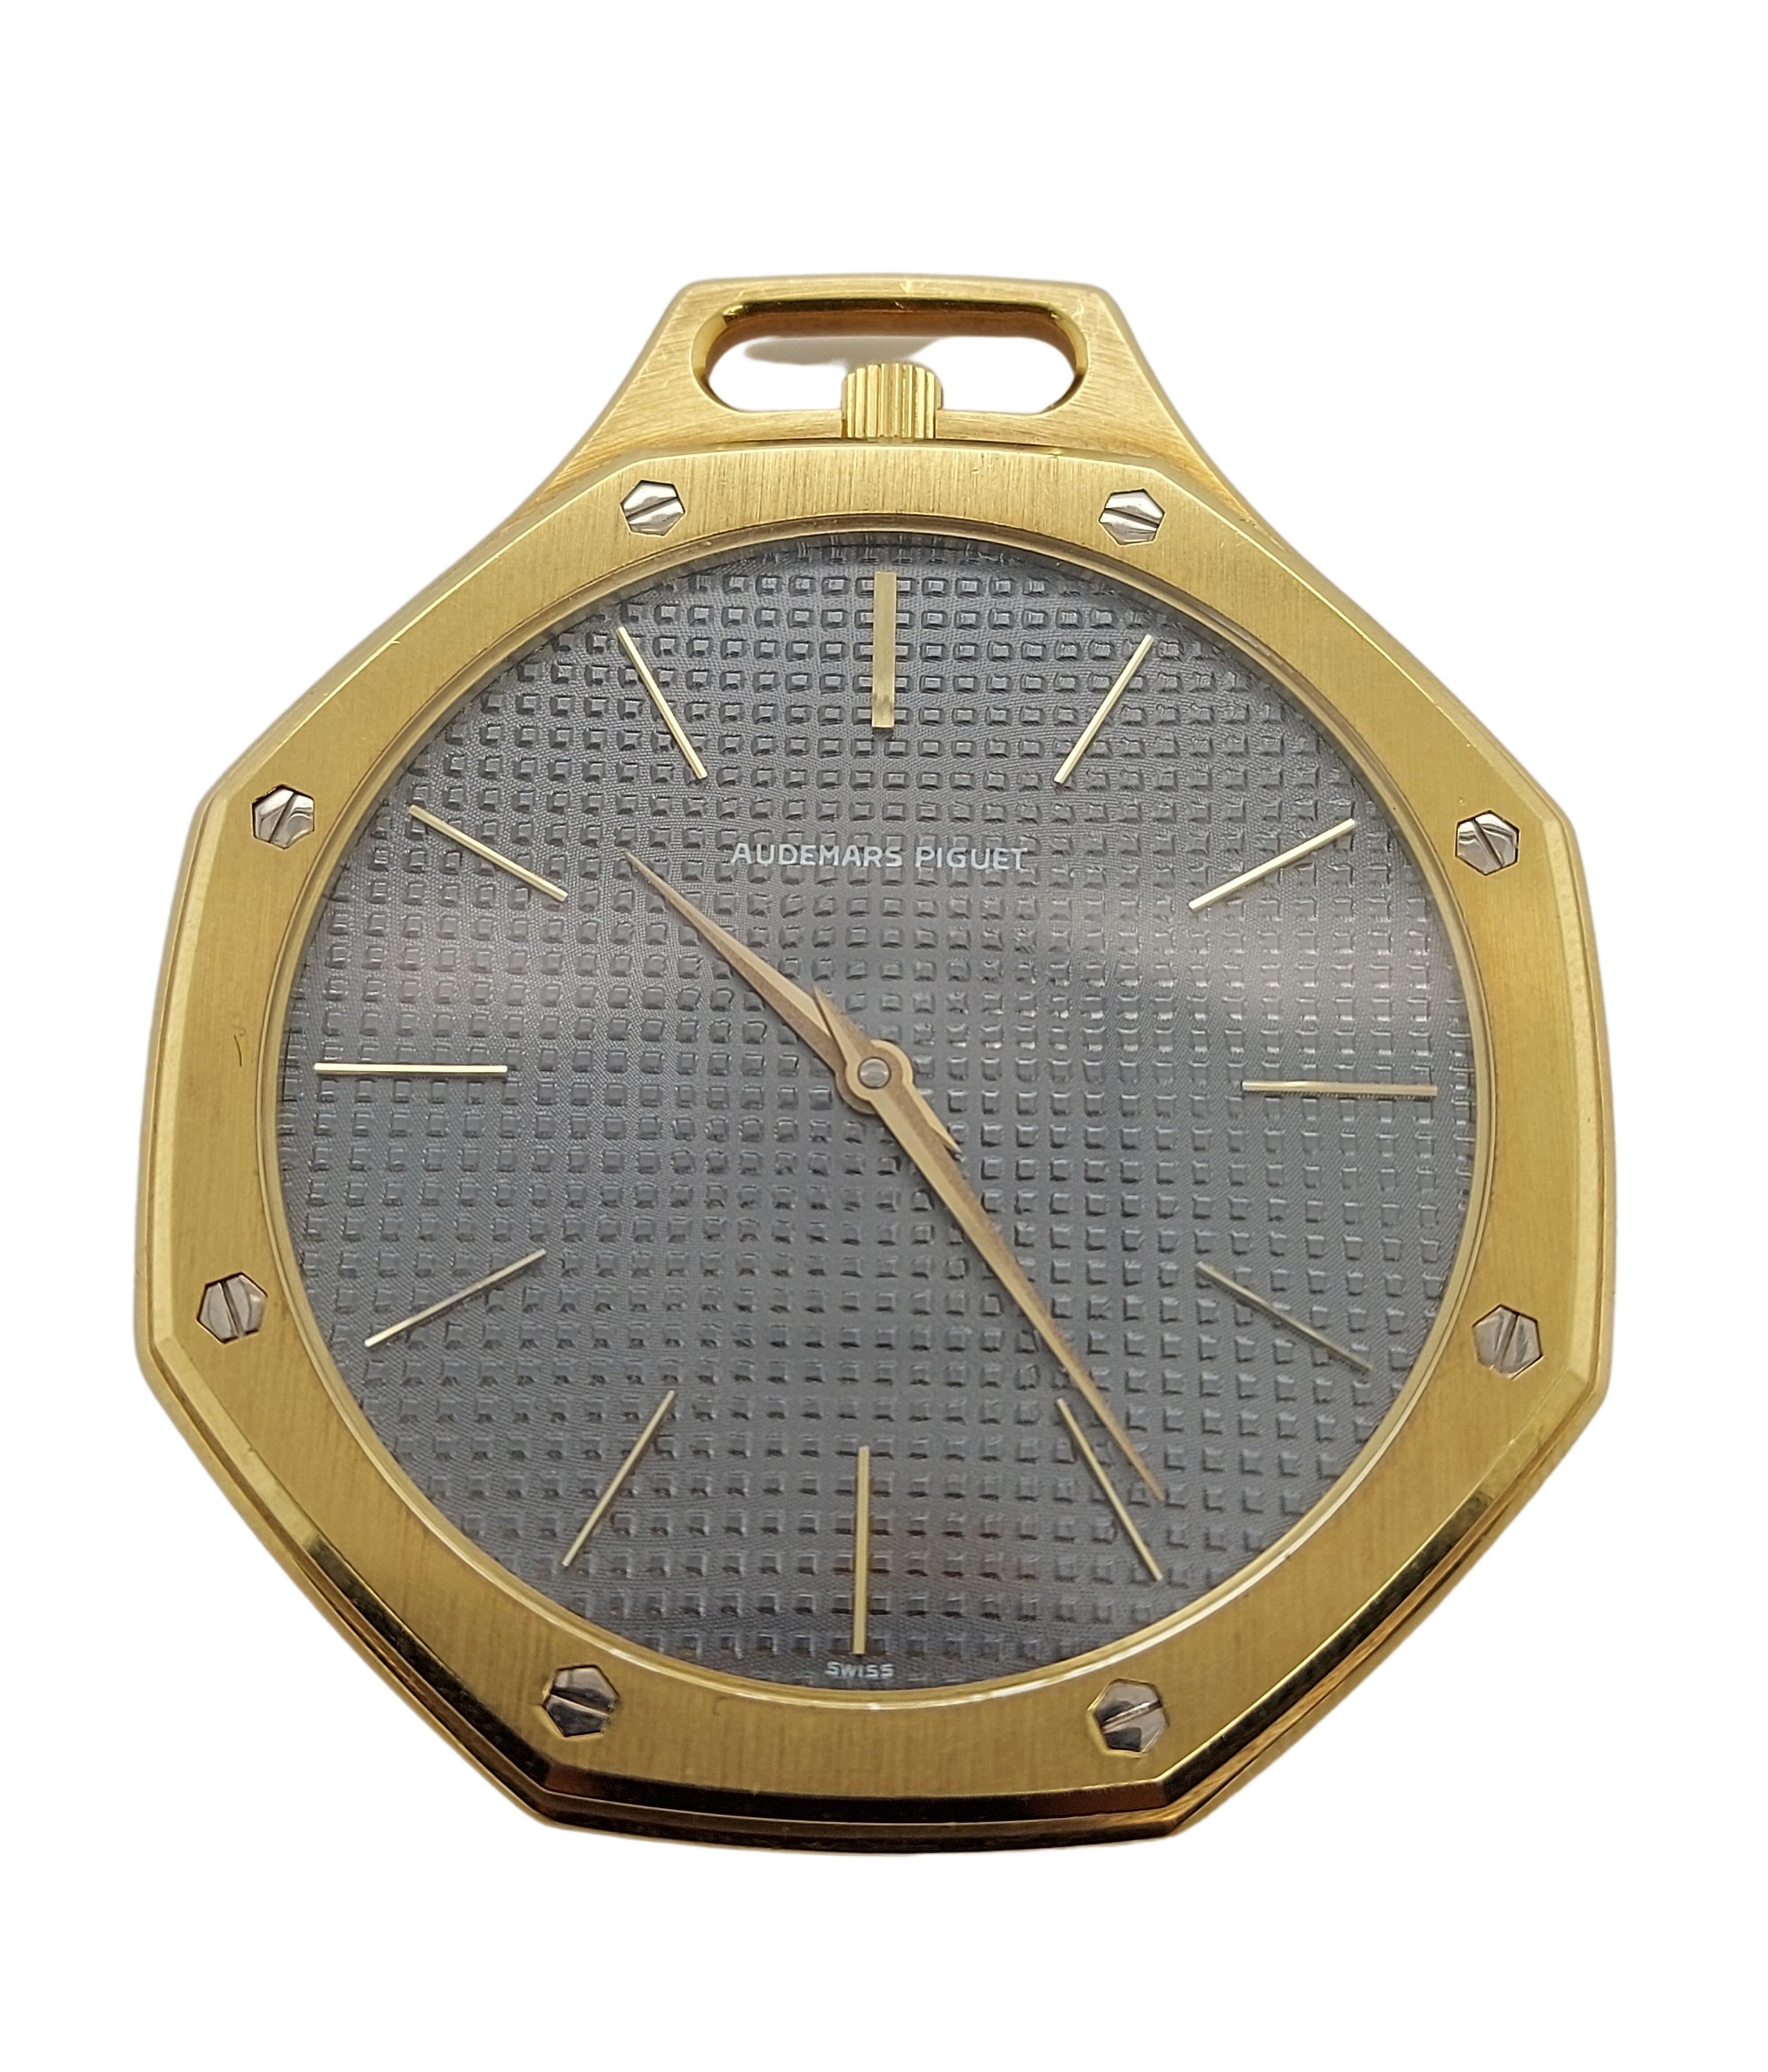 18kt Yellow Gold Octagonal Audemars Piguet Royal Oak Pocket Watch

Reference: 5691BA

Calibre: 5020

Movement: Mechanical movement, Manual Winding

Case: 18kt Yellow gold, measurements 44 mm x 50 mm (incl. crown), thickness 4.6 mm, Screwed gold